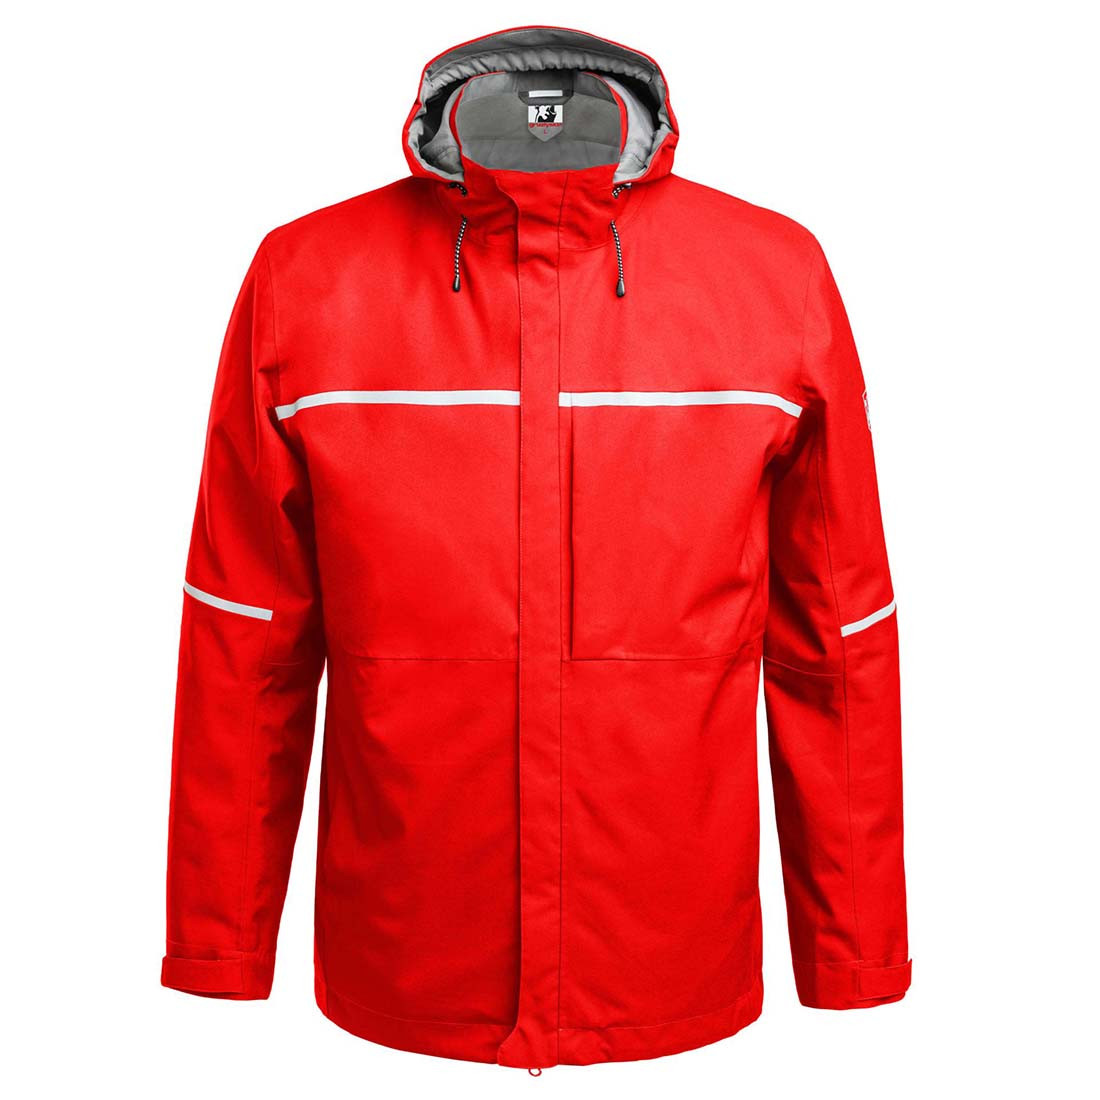 RESIST Weather Hardshell Jacket - Safetywear